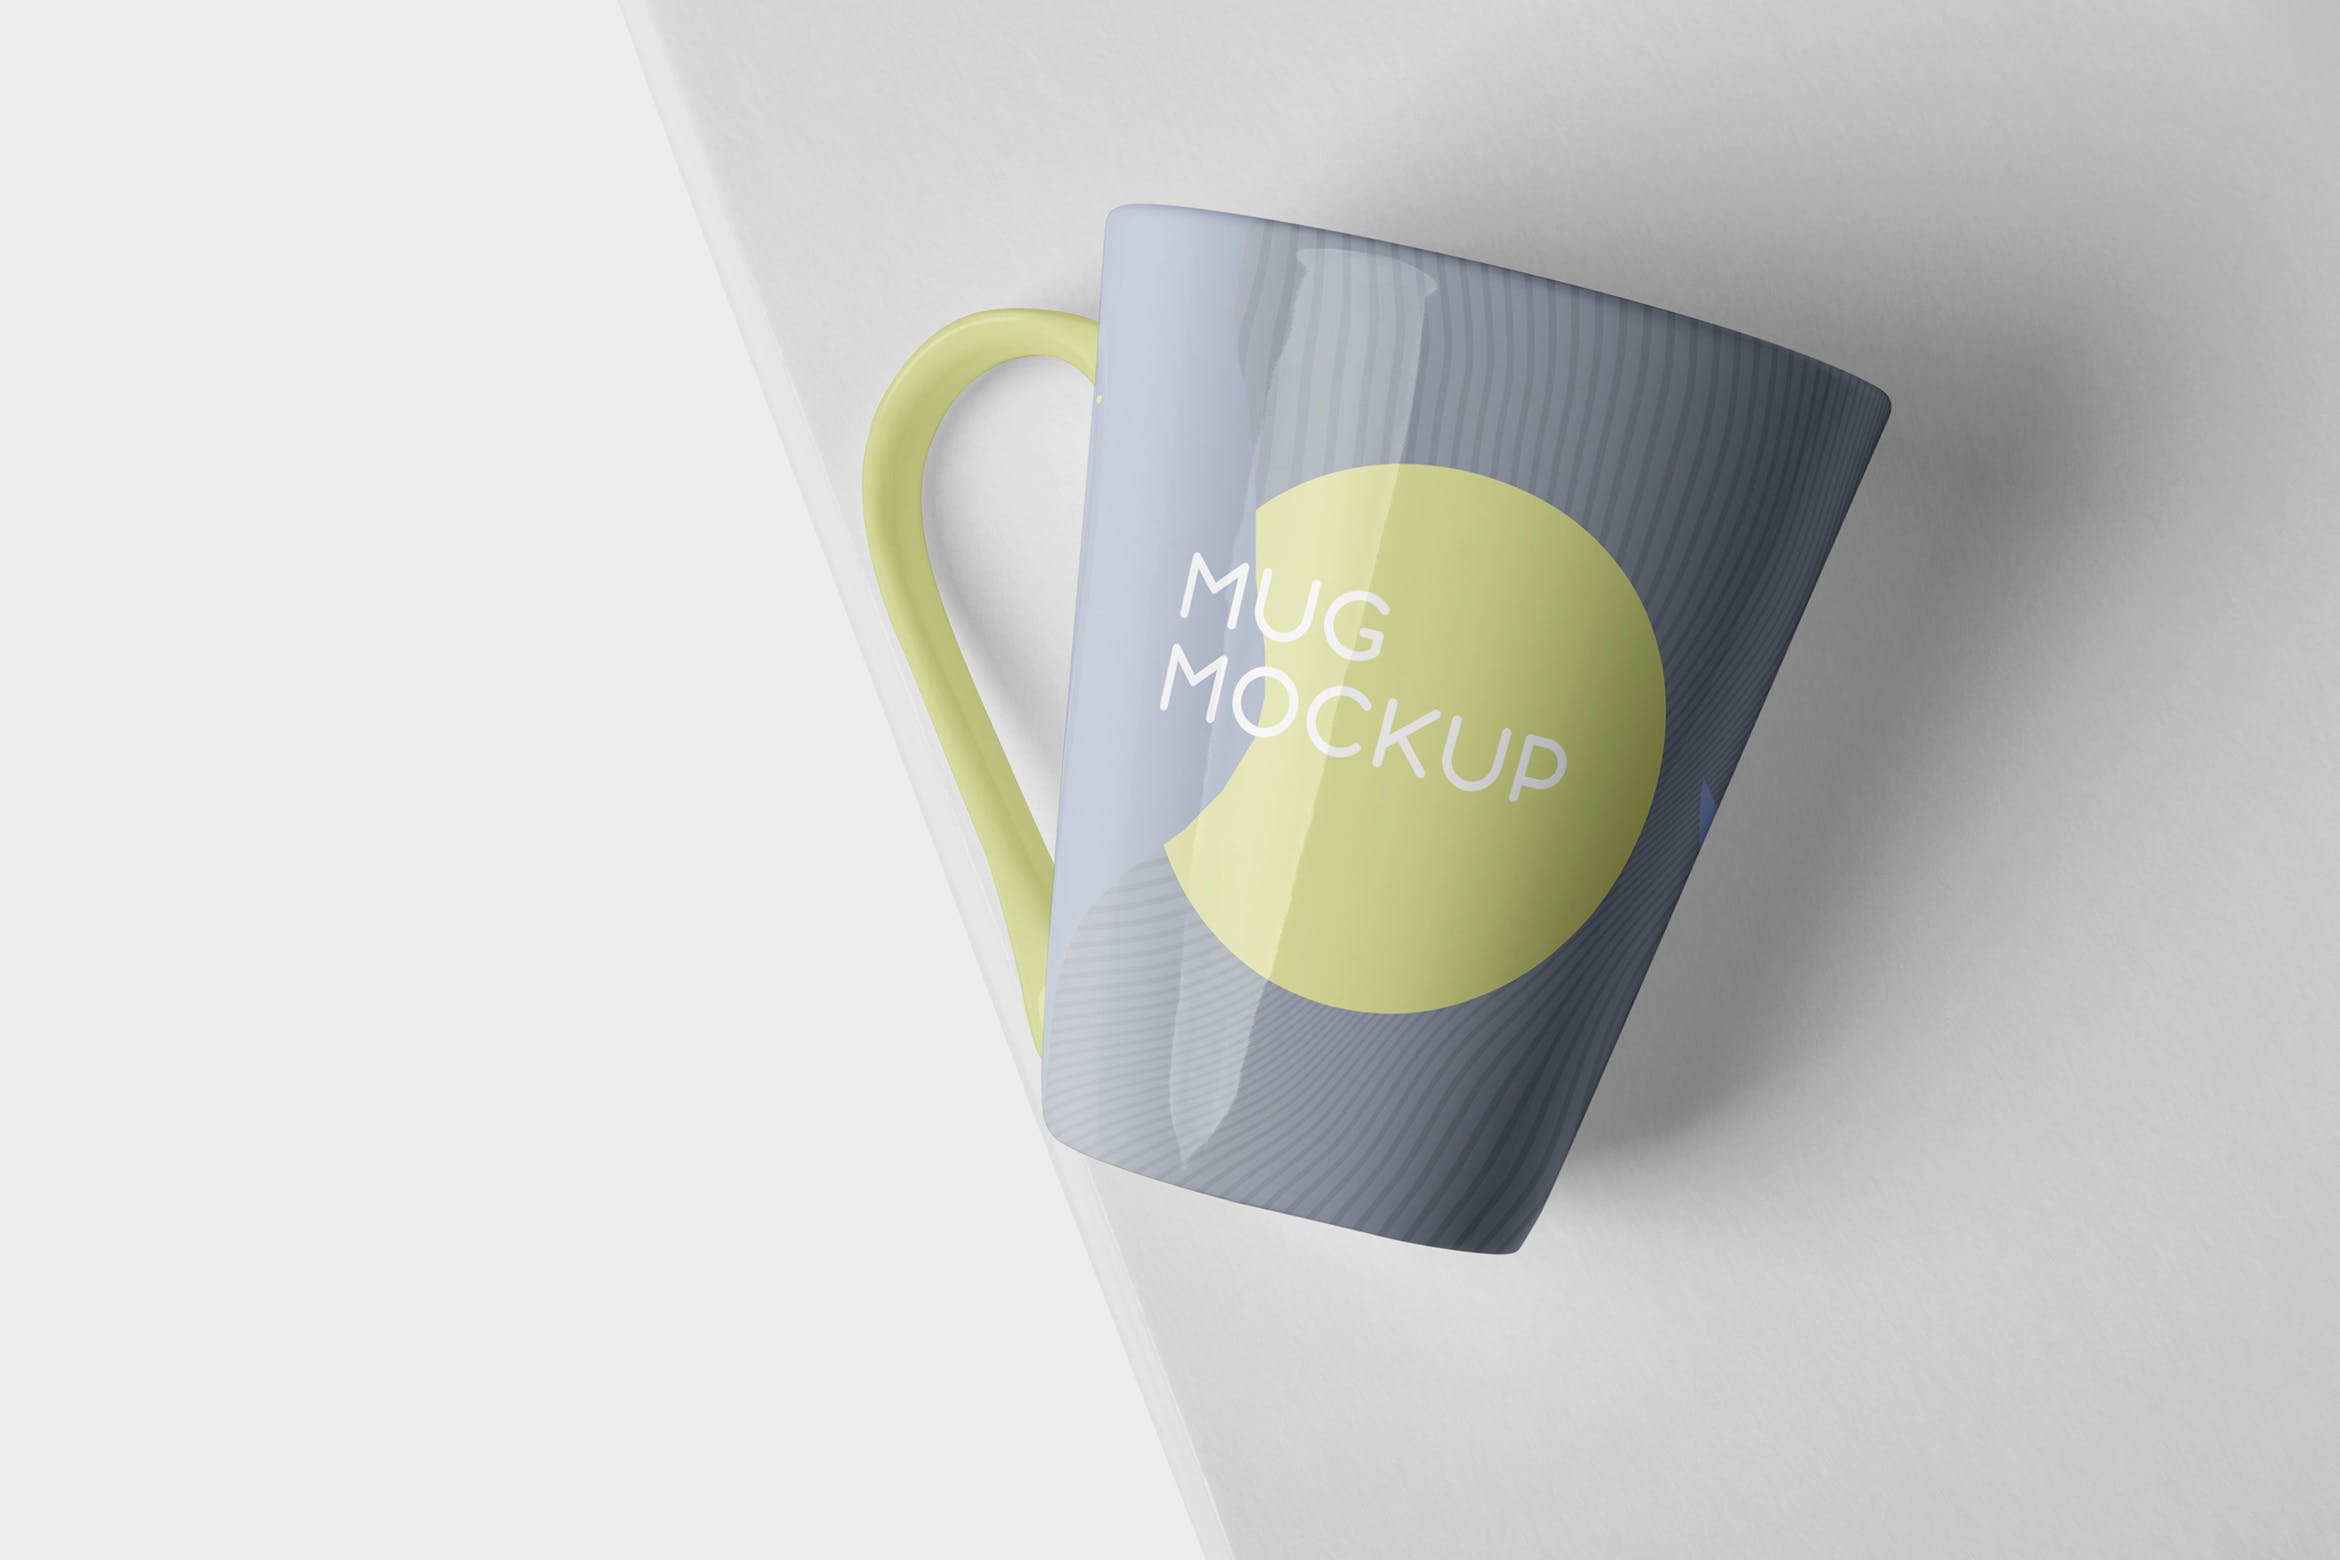 锥形马克杯图案设计16设计网精选 Mug Mockup – Cone Shaped插图